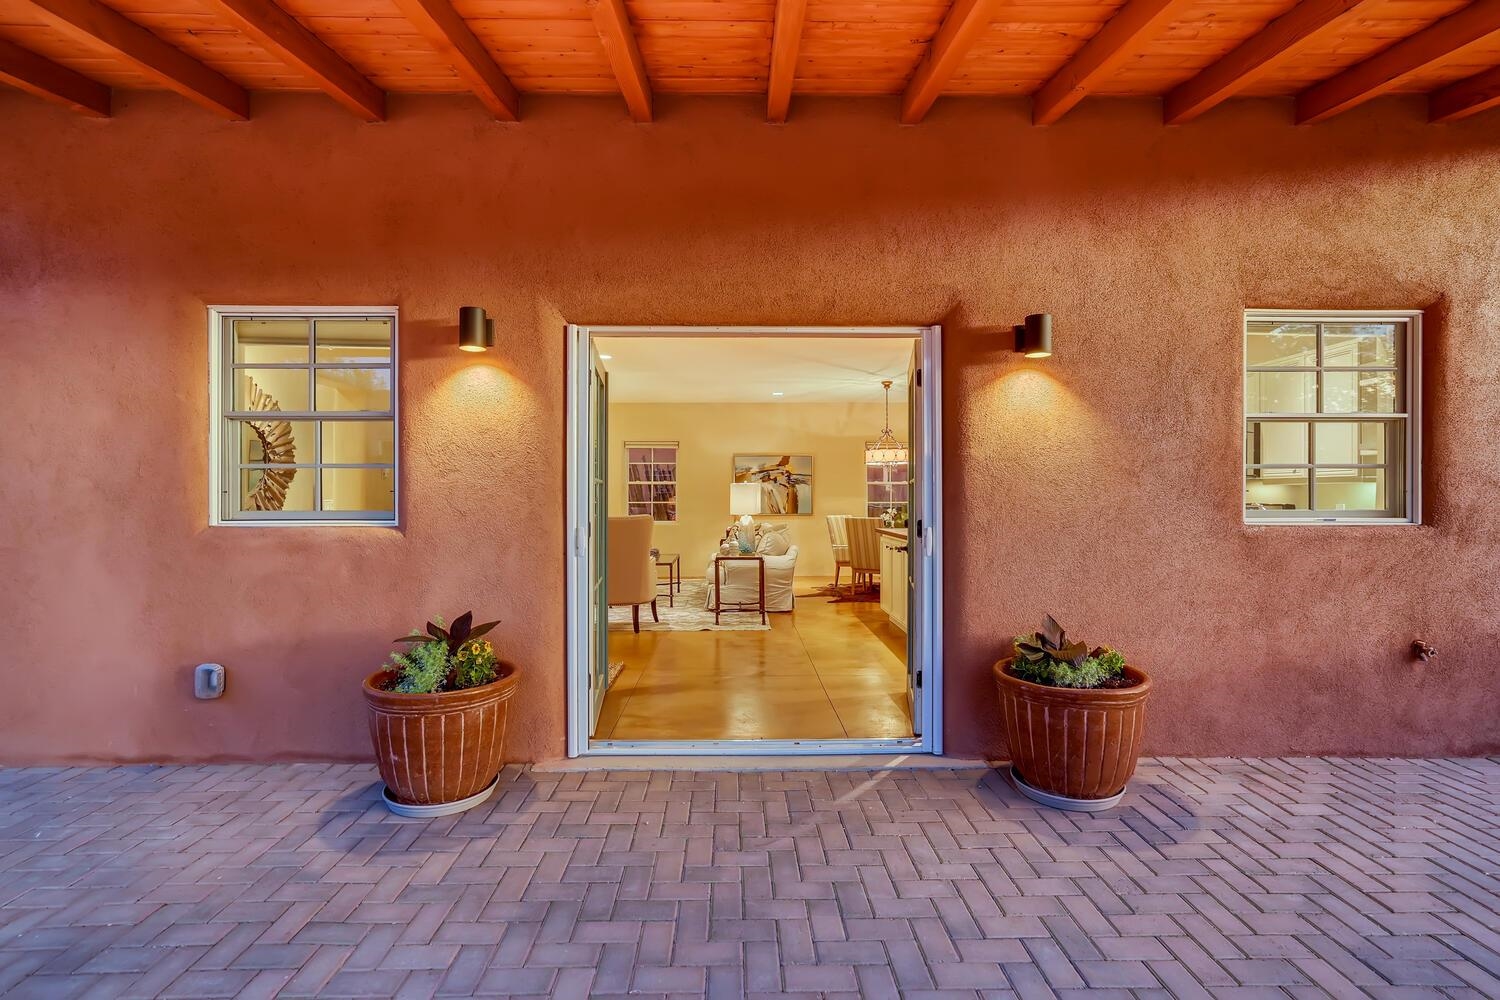 156 Lorenzo, Santa Fe, New Mexico 87501, 2 Bedrooms Bedrooms, ,3 BathroomsBathrooms,Residential,For Sale,156 Lorenzo,202104081